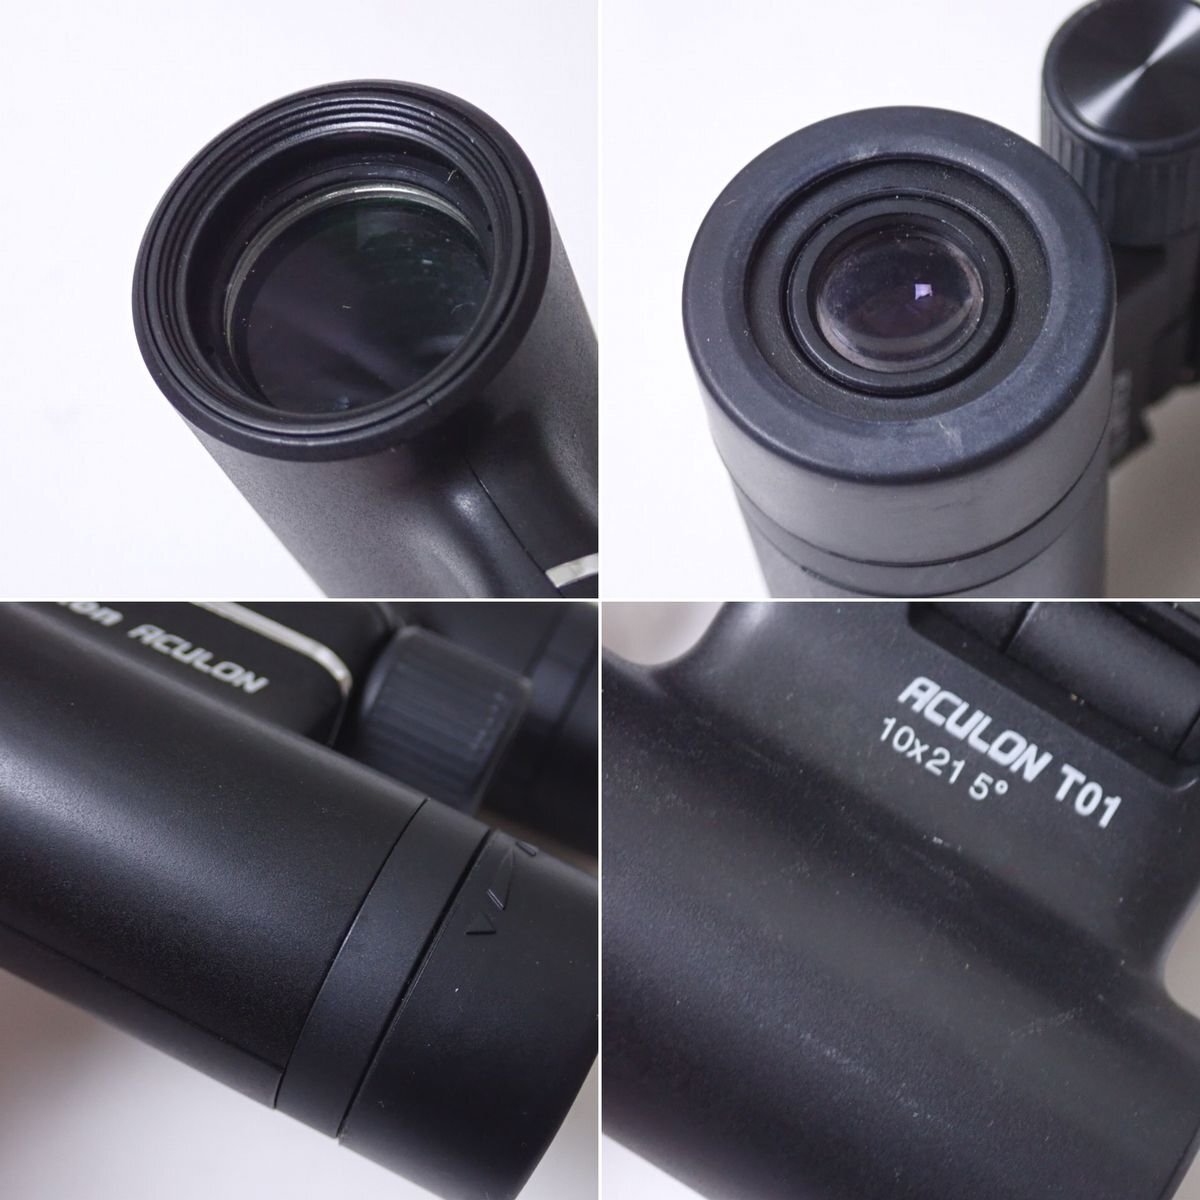 *Nikon/ Nikon ACULON T01 10x21 binoculars / black /10 times / real field of vision 5°/ accessory equipped &1968700102